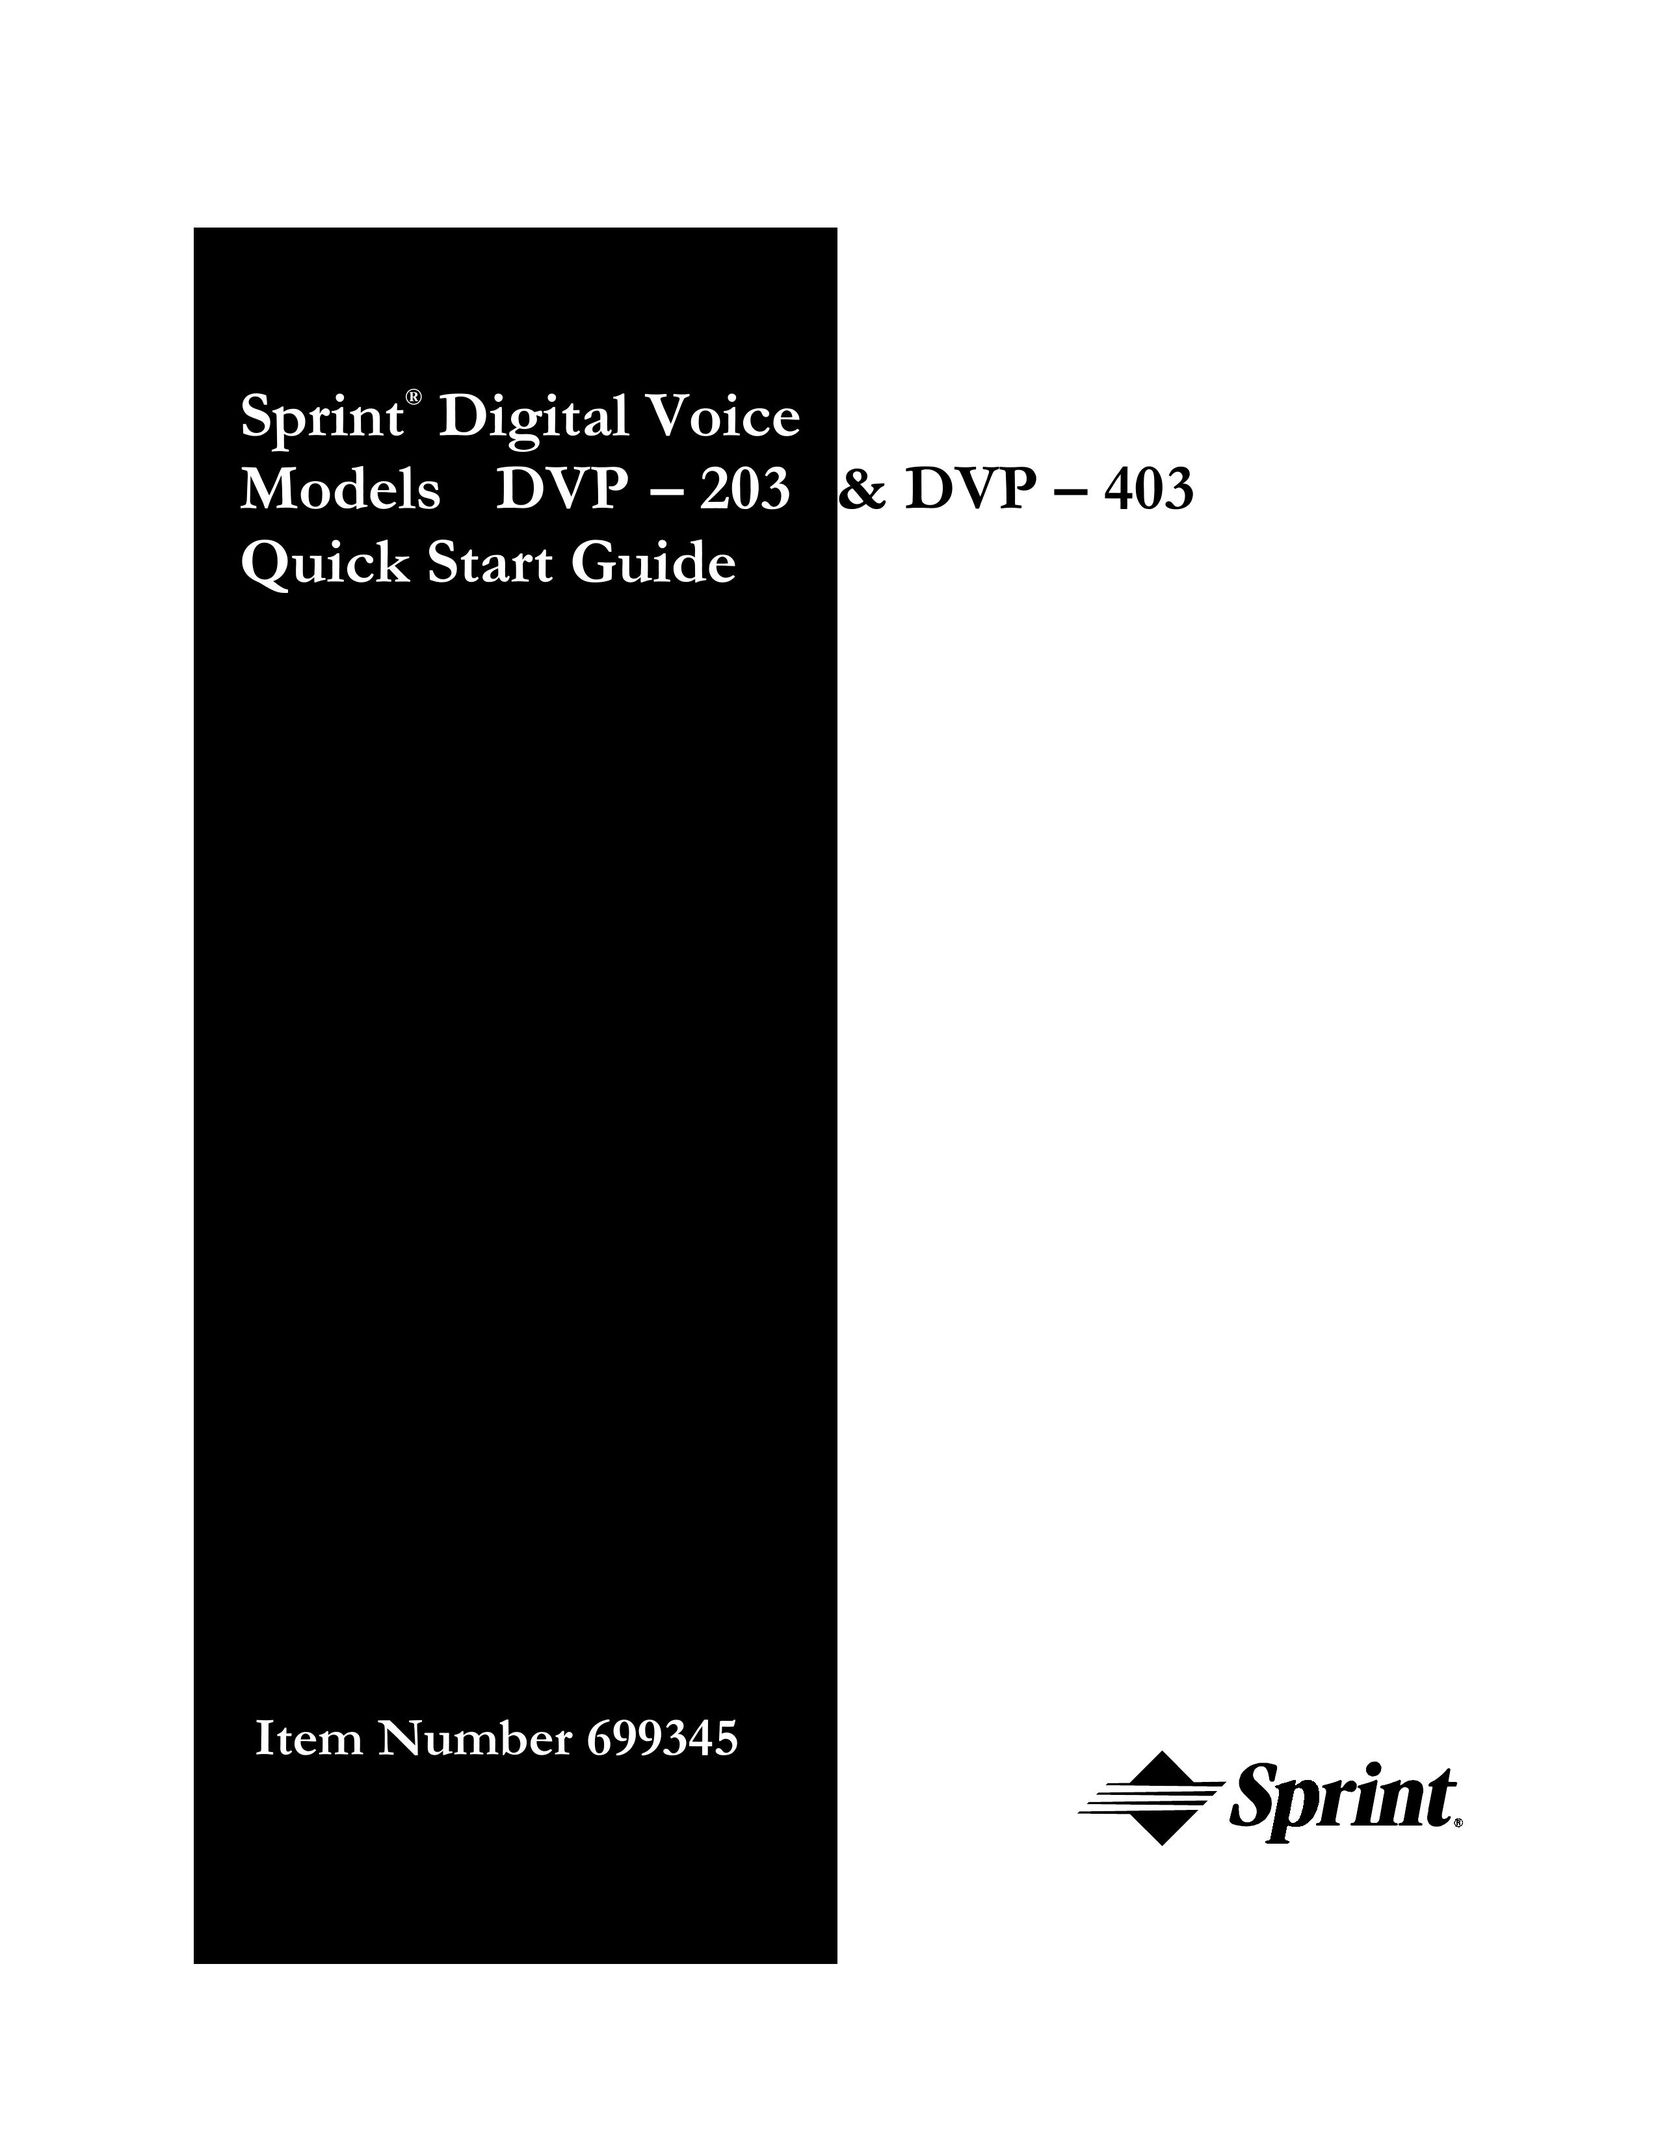 Sprint Nextel DVP 203 Answering Machine User Manual